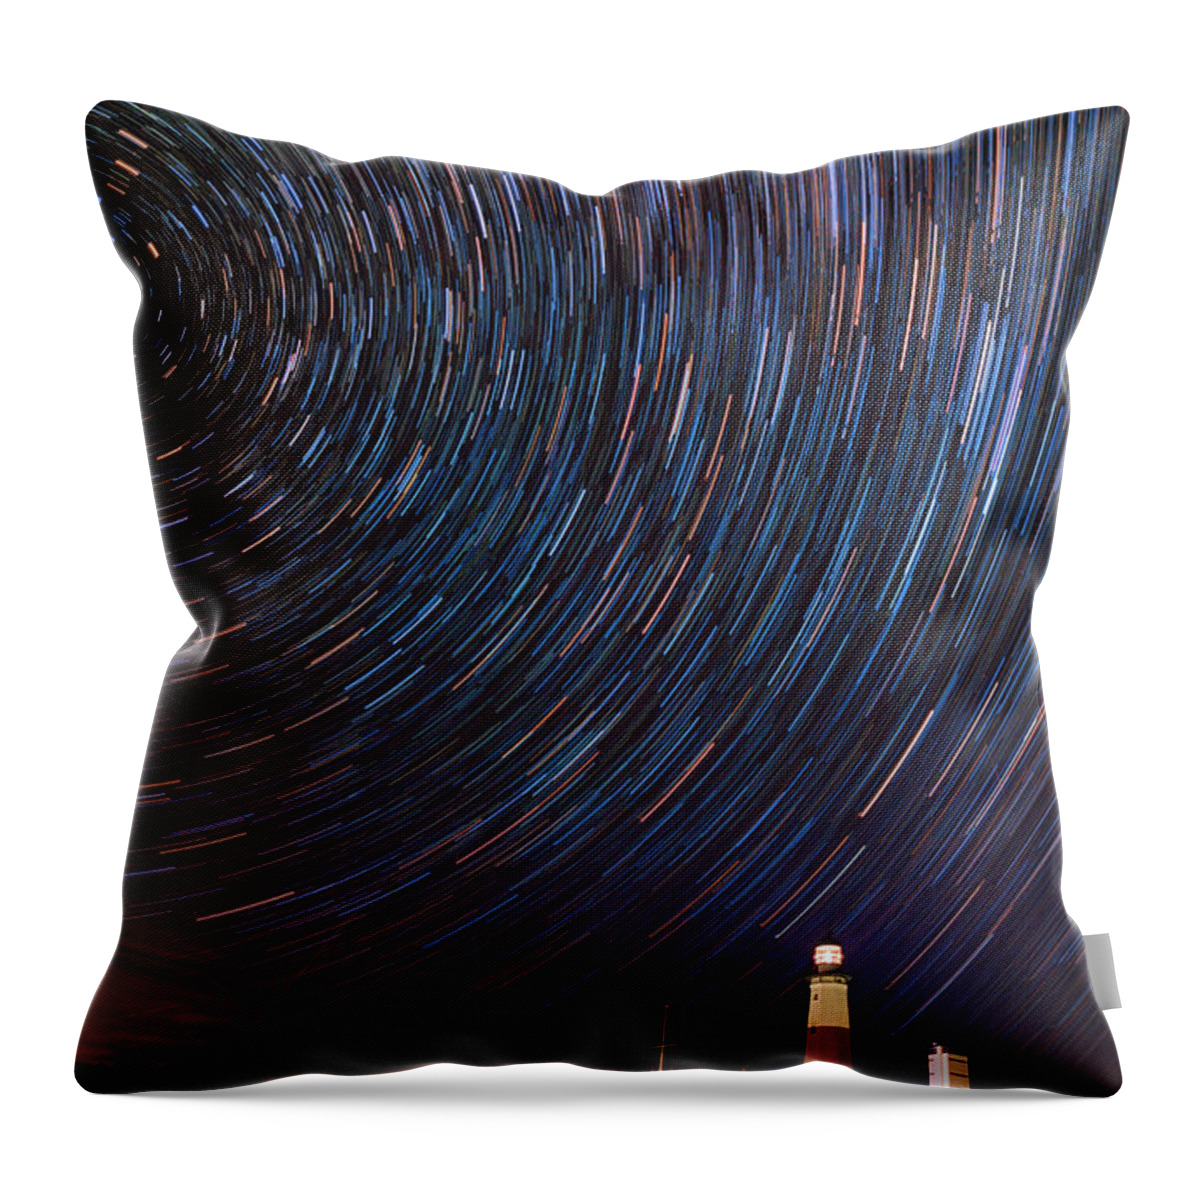 Montauk Throw Pillow featuring the photograph Montauk Star Trails by Rick Berk